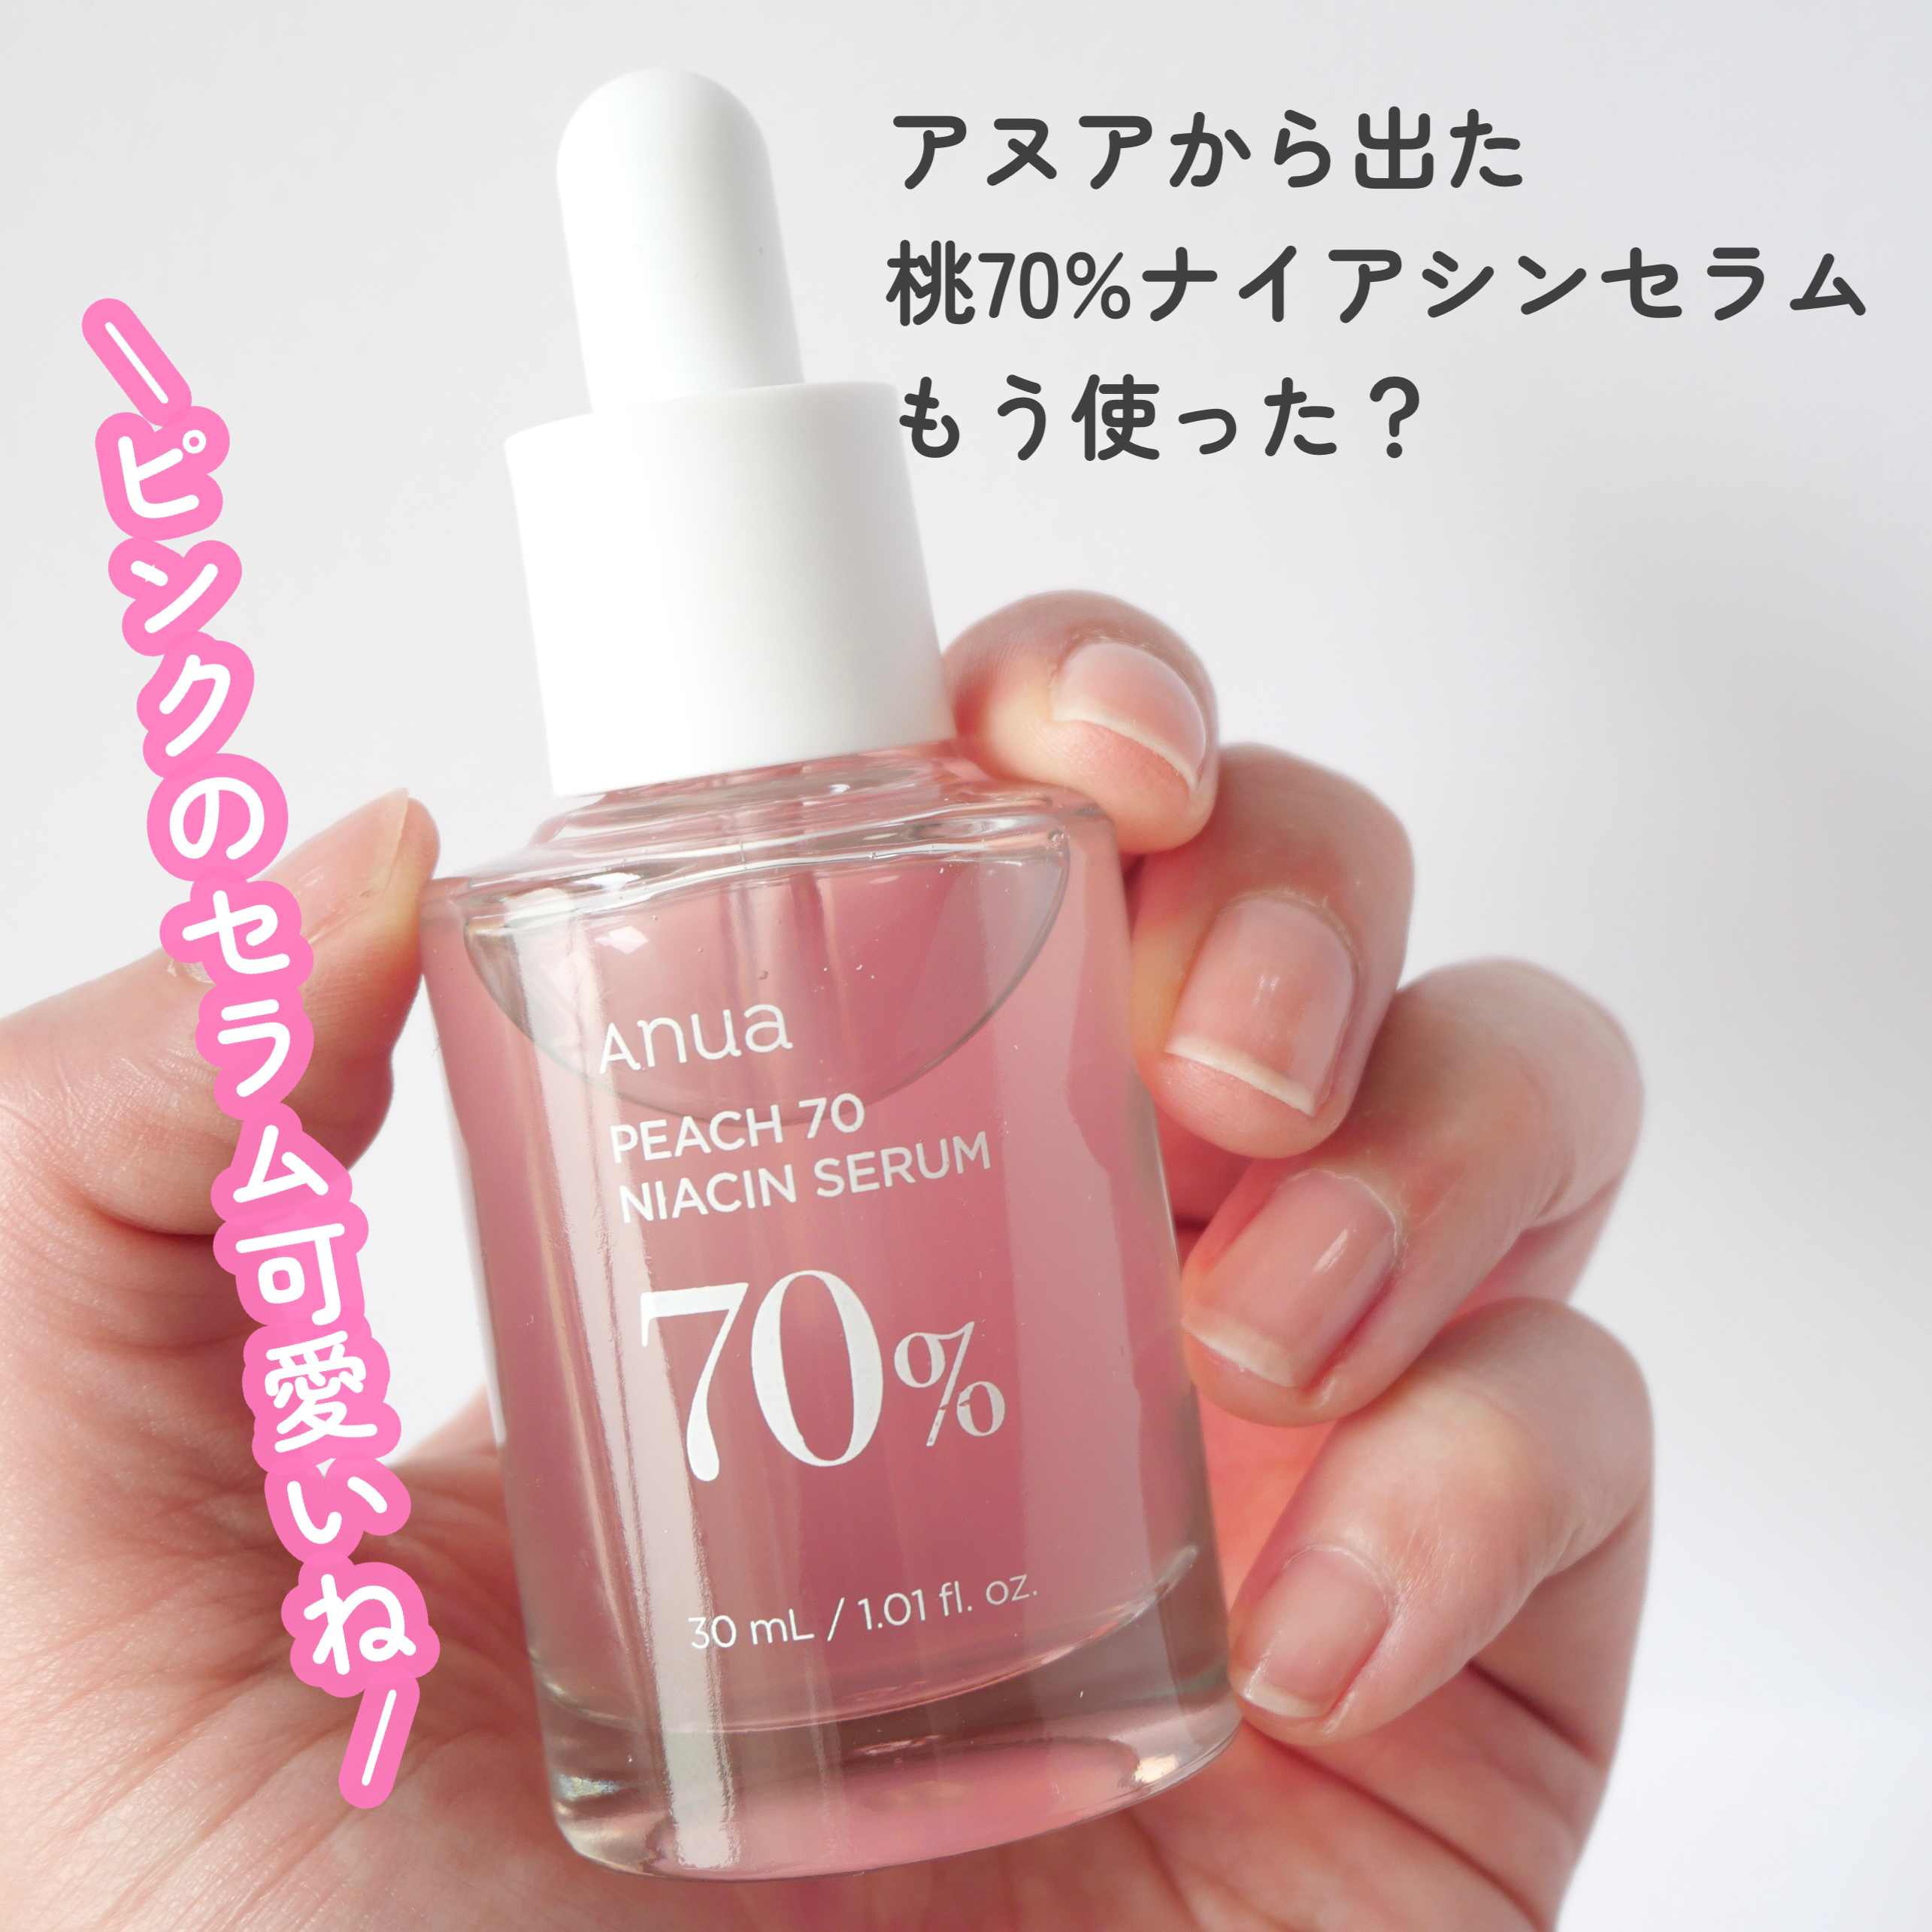 ANUA アヌア Peach 桃70% ナイアシンセラム美容液 アンプル 2個 基礎化粧品